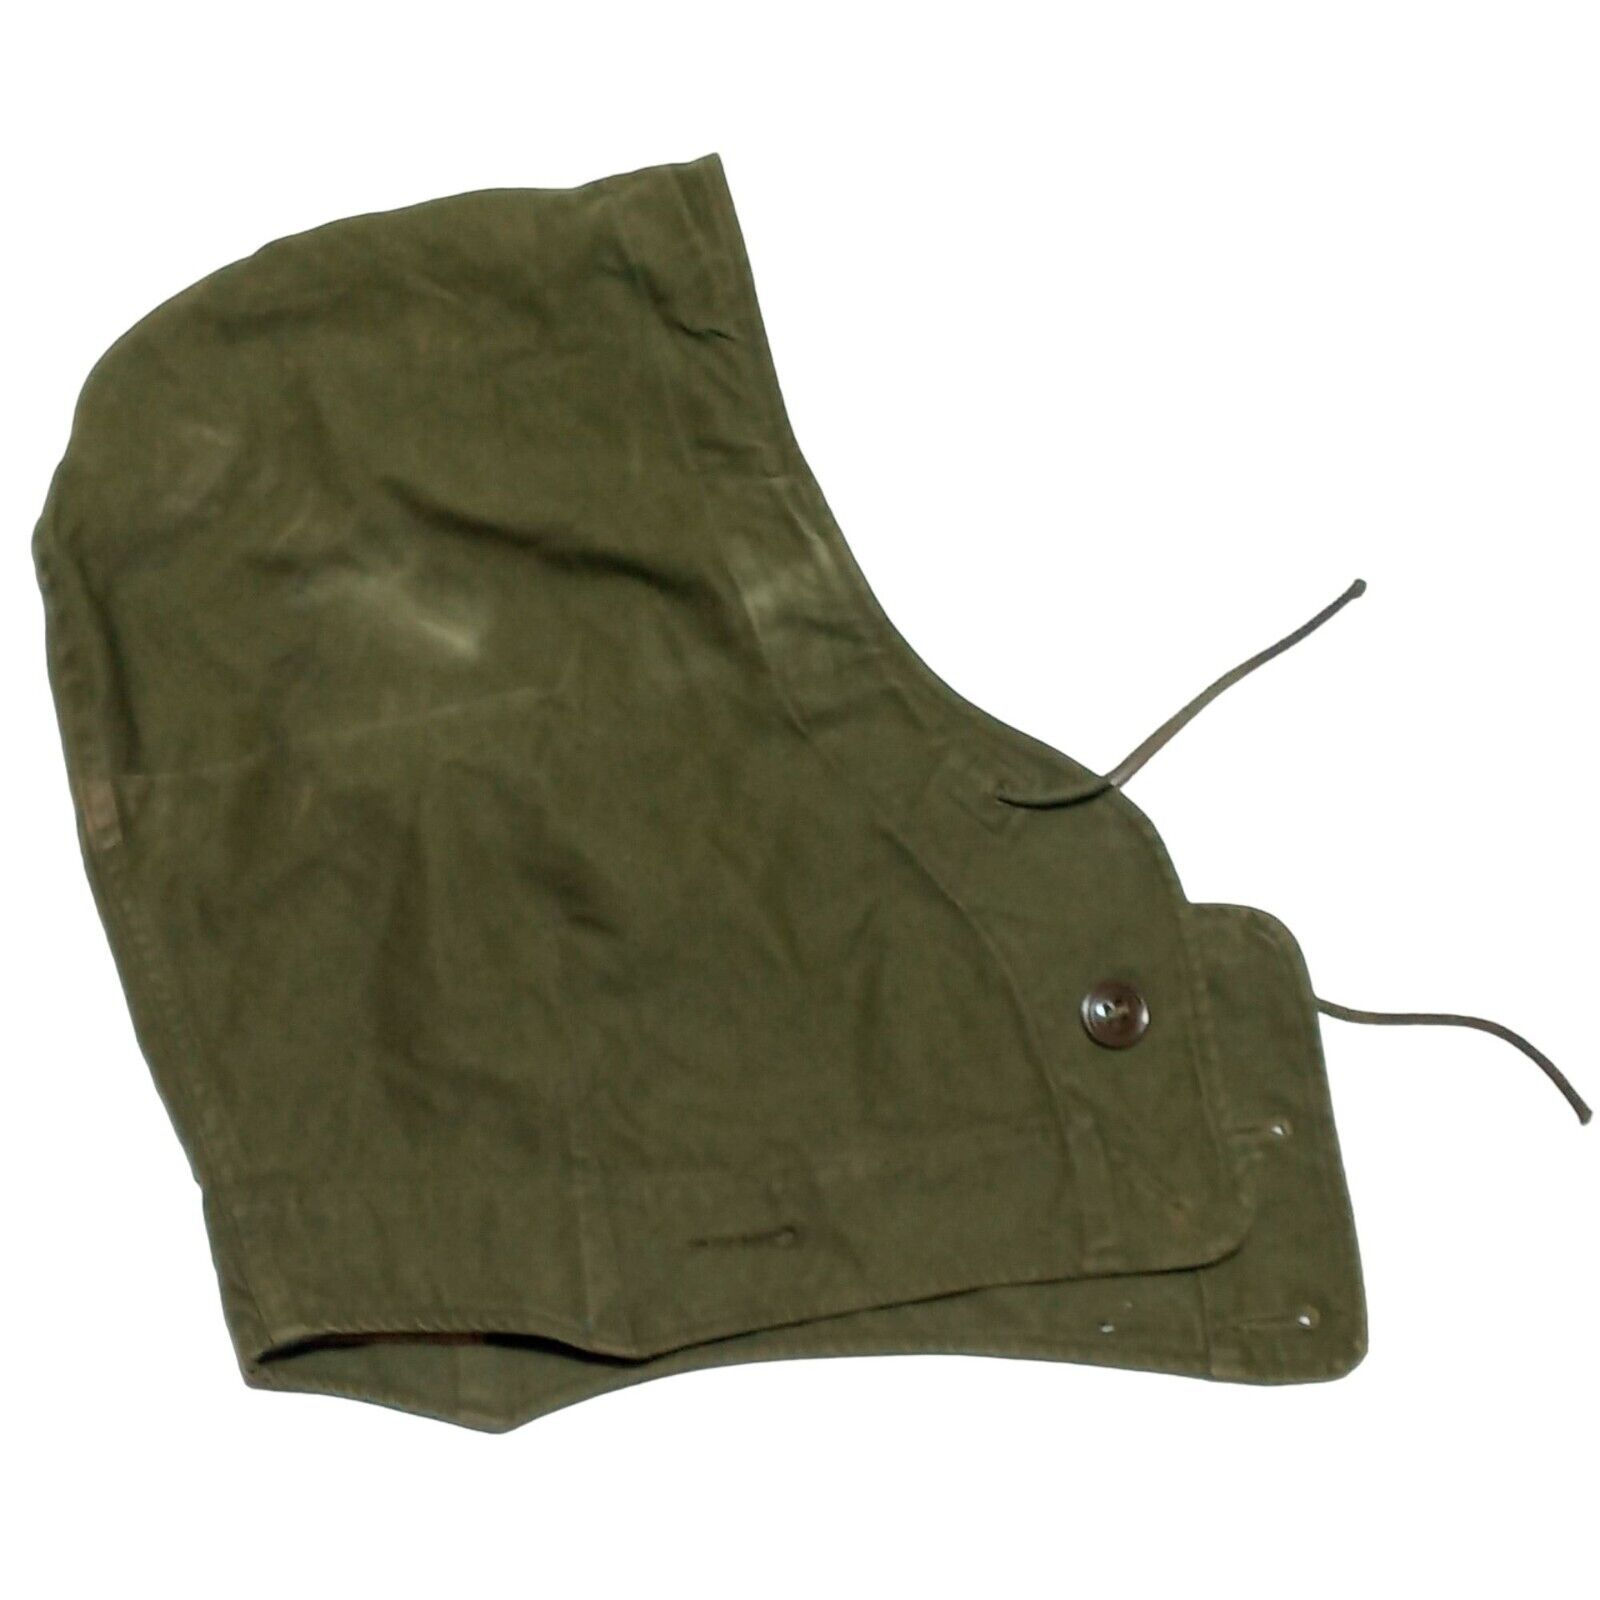 Vintage Military Hood World War II WW2 Army Green Used Medium Collectible